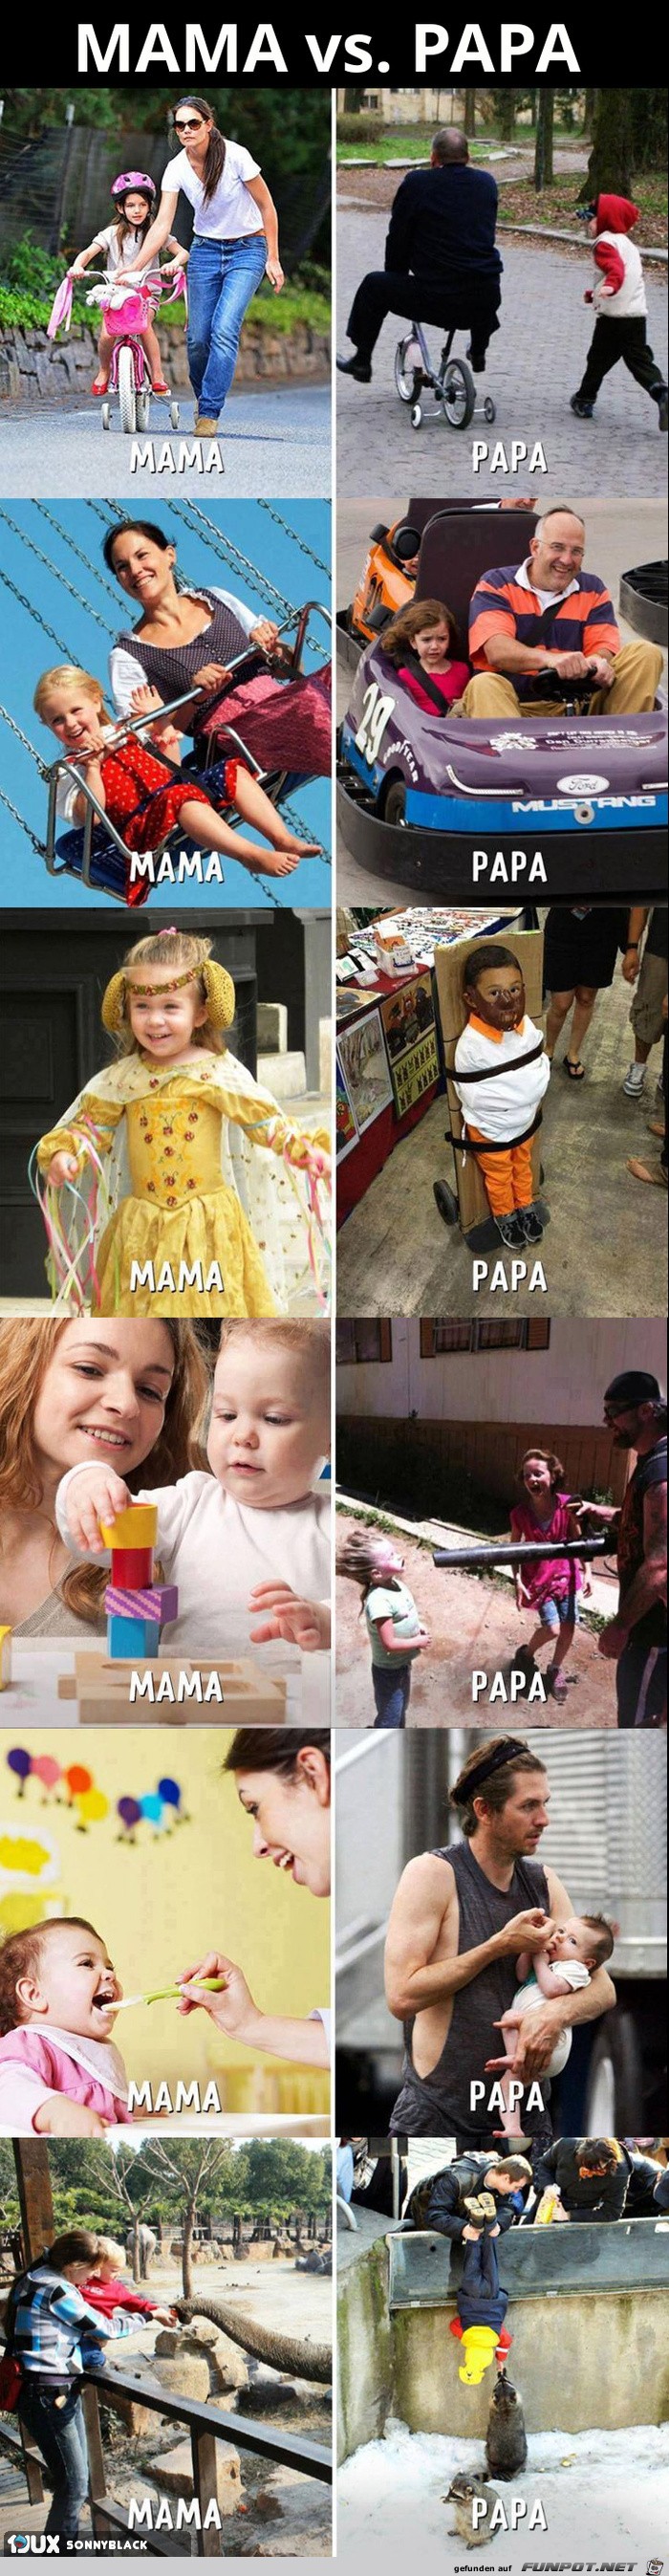 Mama vs. Papa